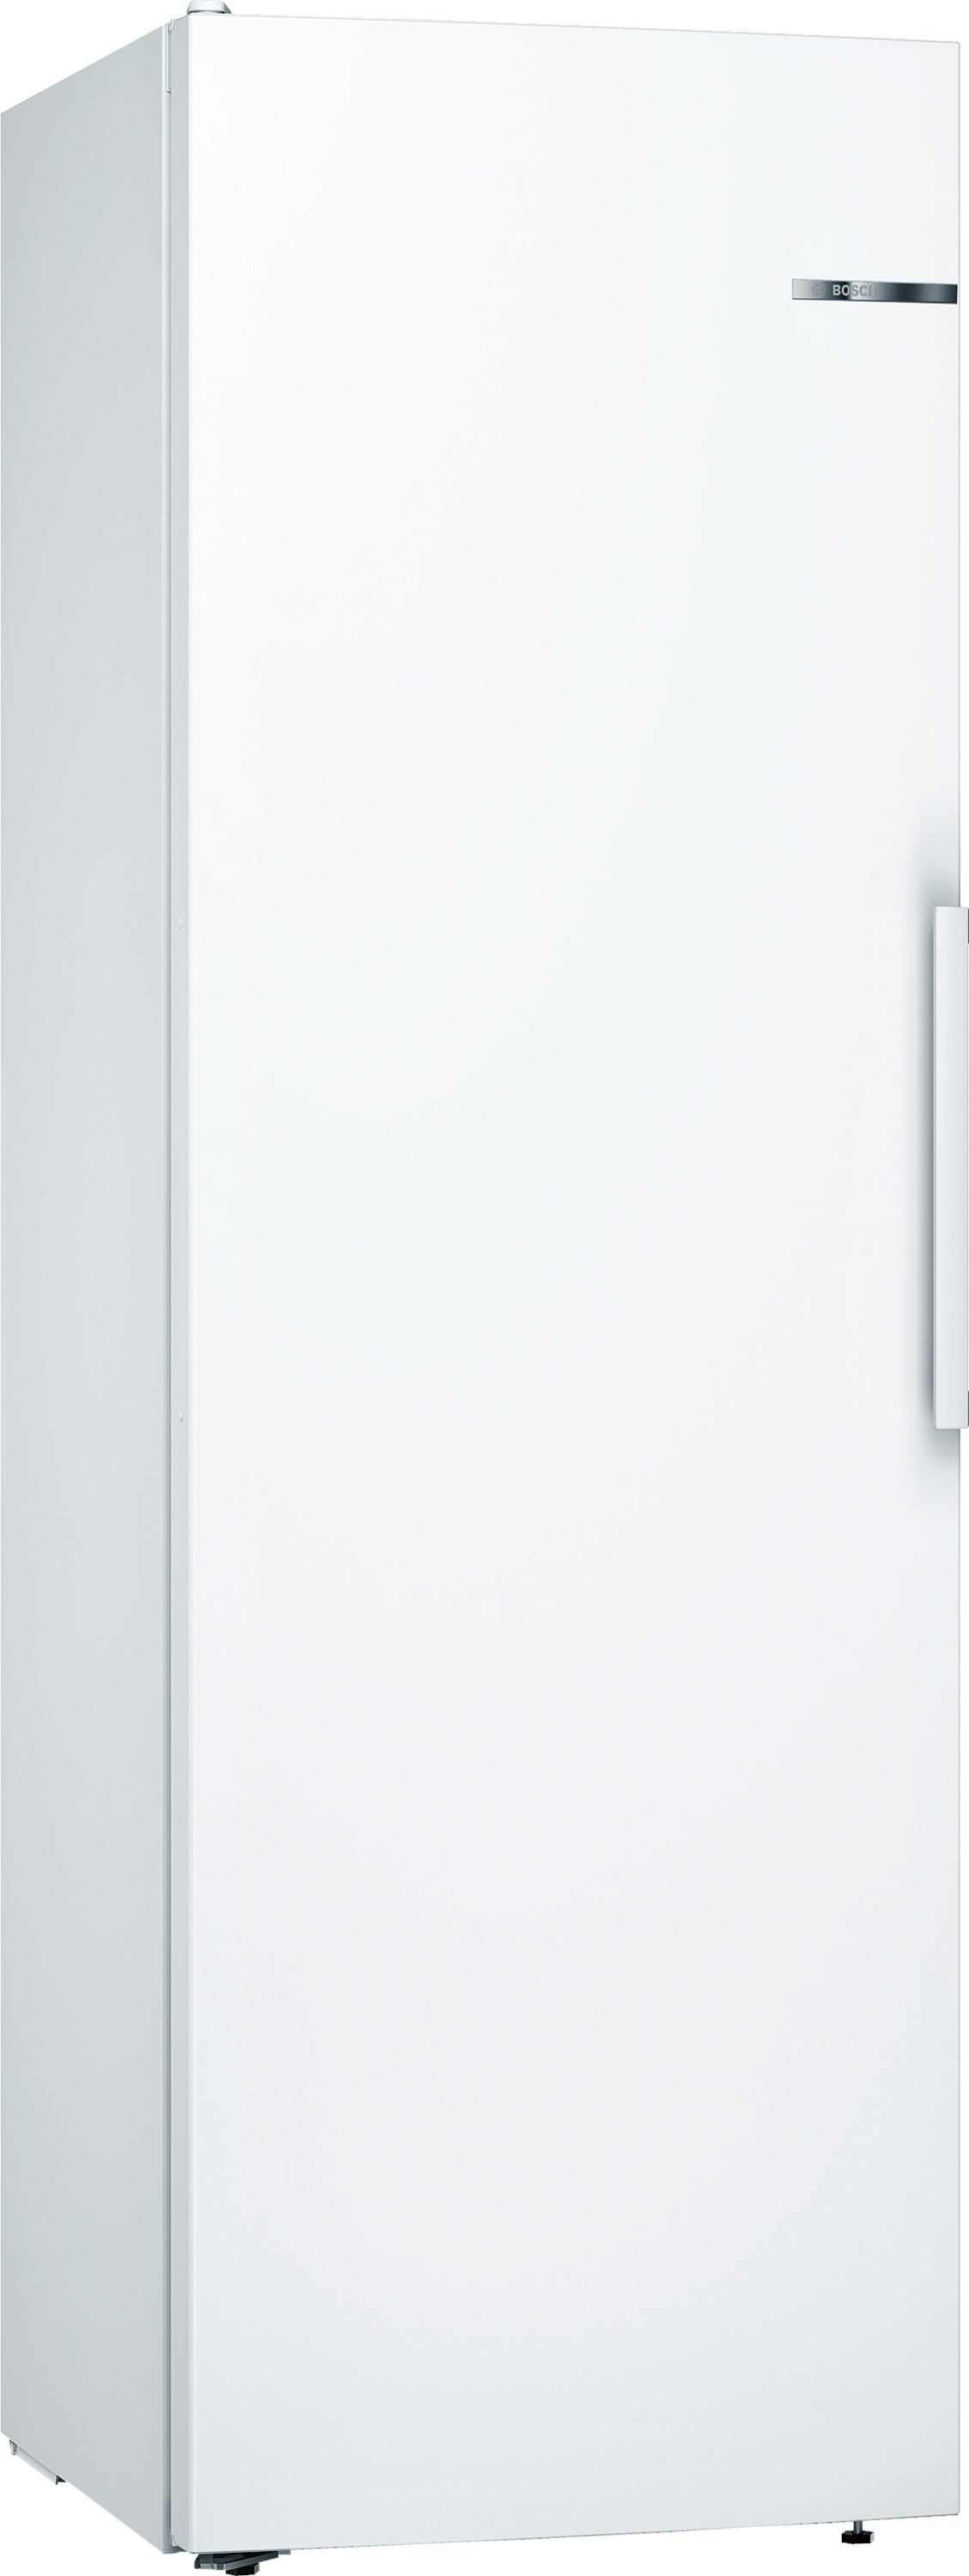 mm KSV36VWEP hoch, Serie 1860 BOSCH (E, 4 Weiß) Kühlschrank